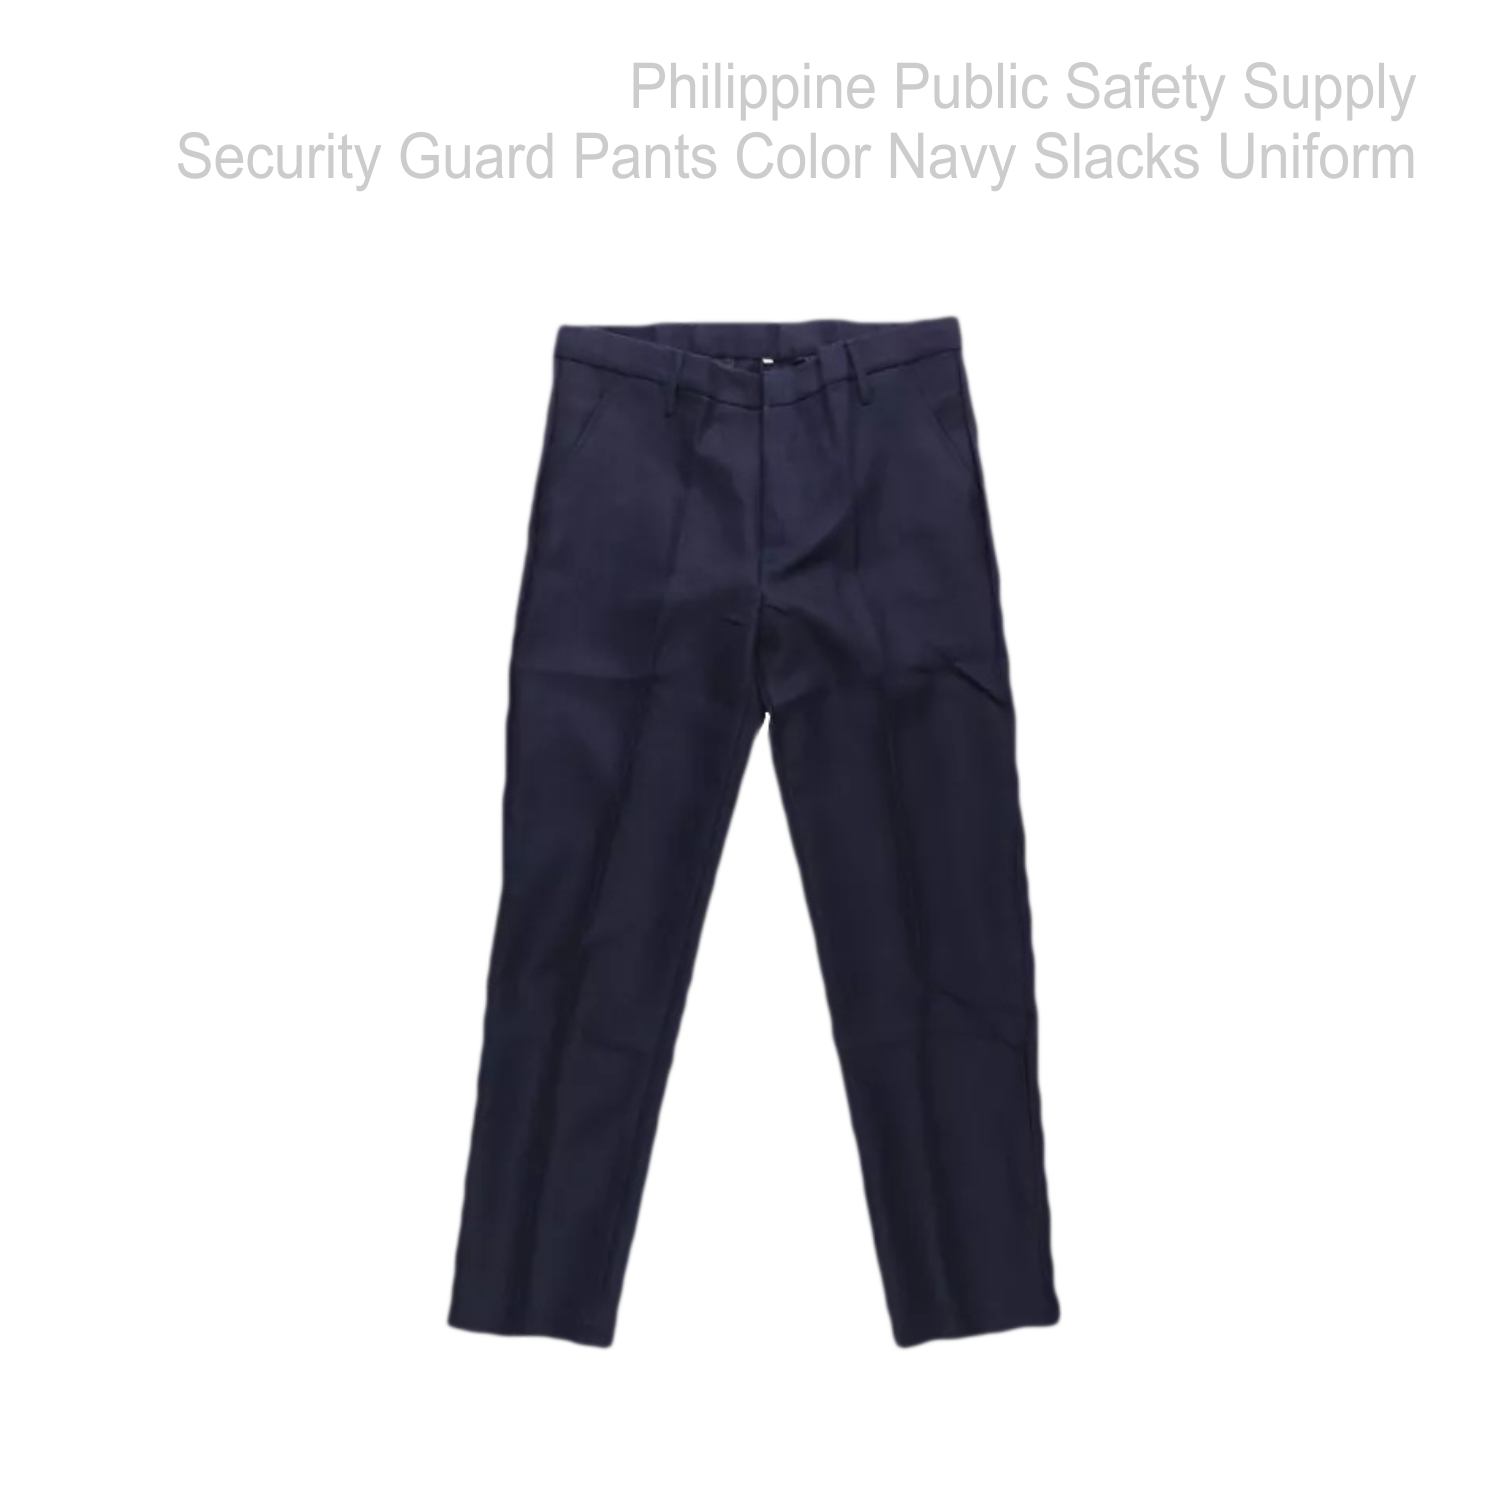 Pants for security guard (semi baston cut) | Lazada PH